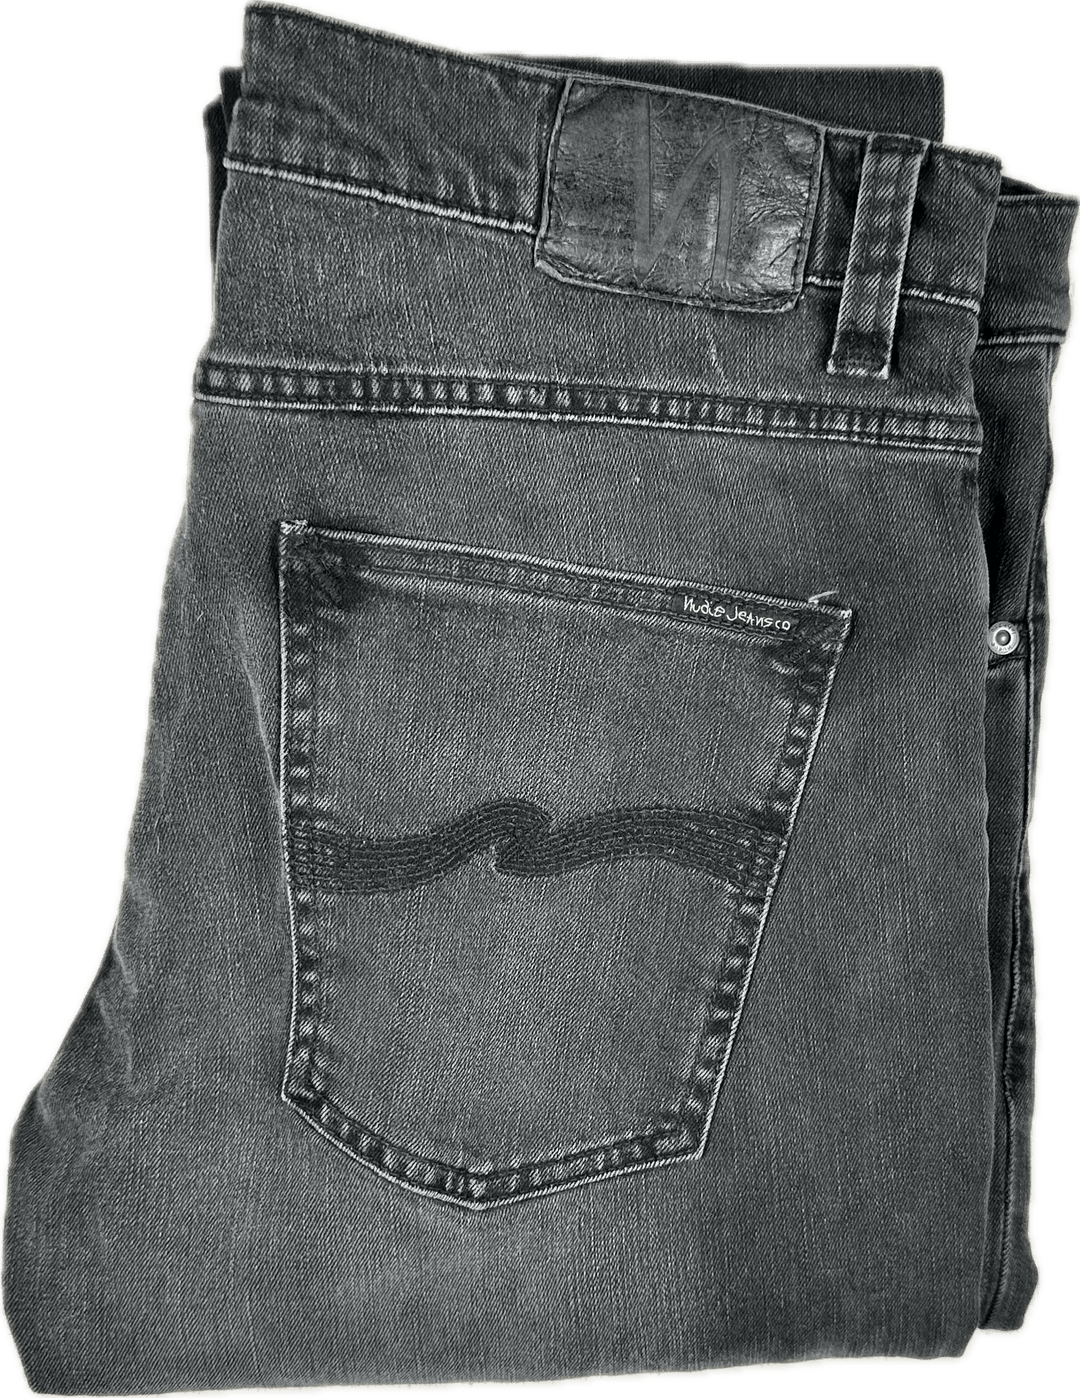 Nudie 'Lean Dean' Black Eyes Wash Organic Cotton Jeans- Size 34.32 - Jean Pool